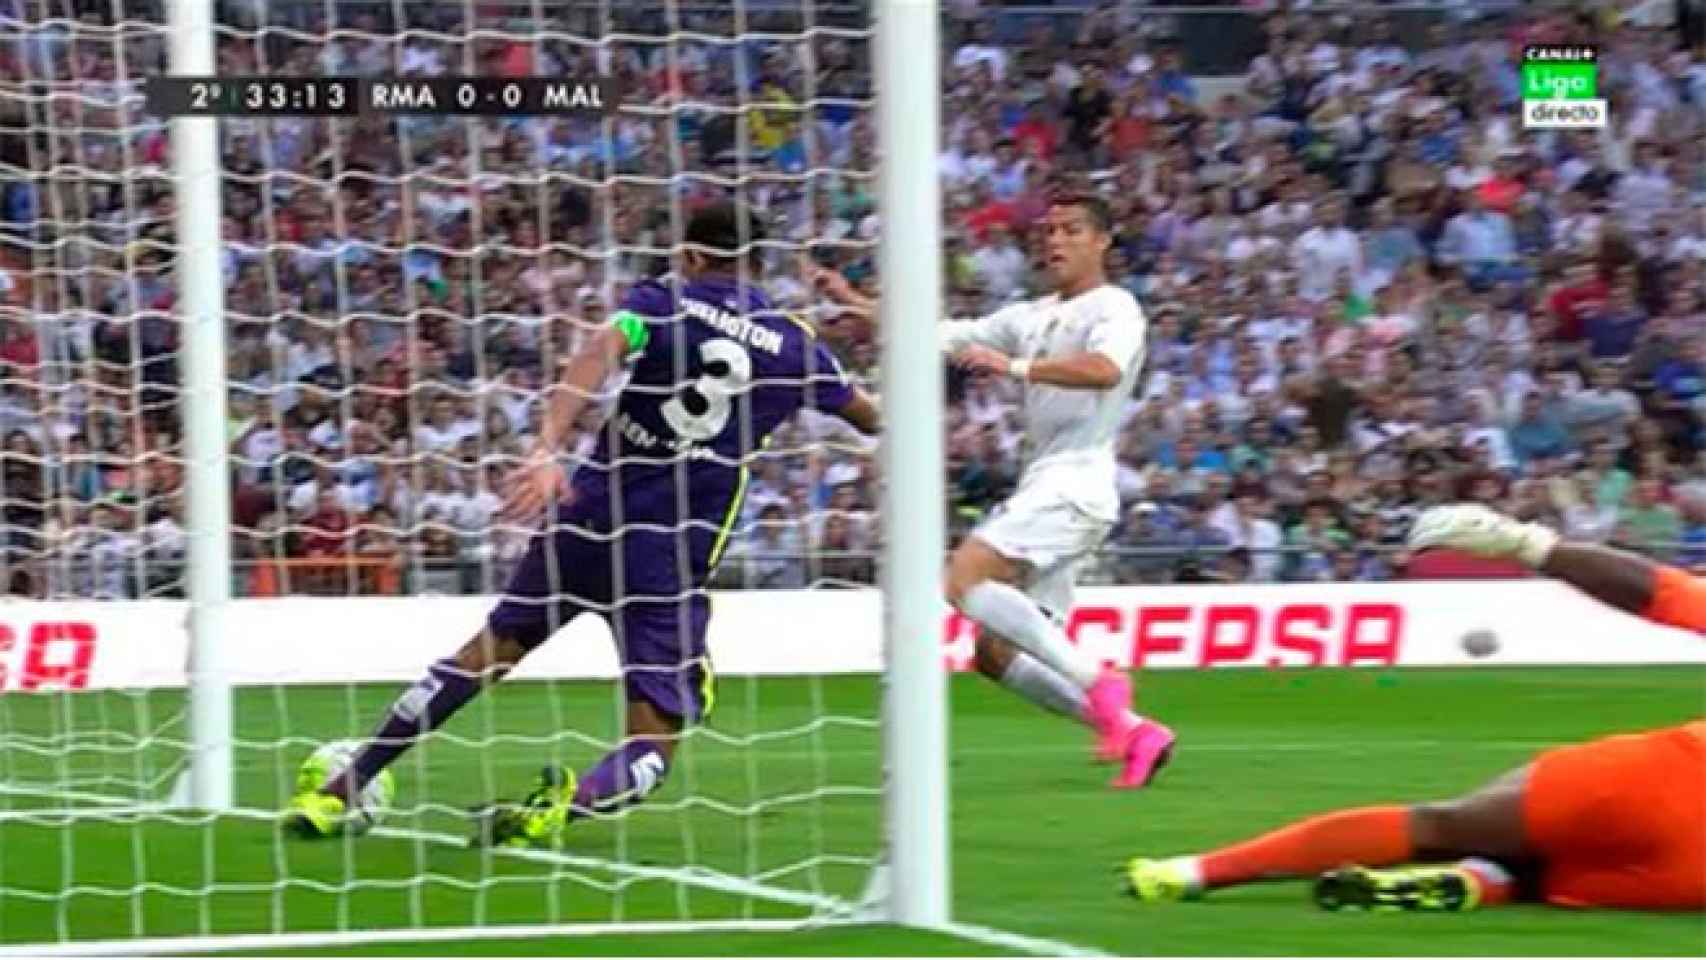 Cristiano mira el balón sobre la línea de gol.